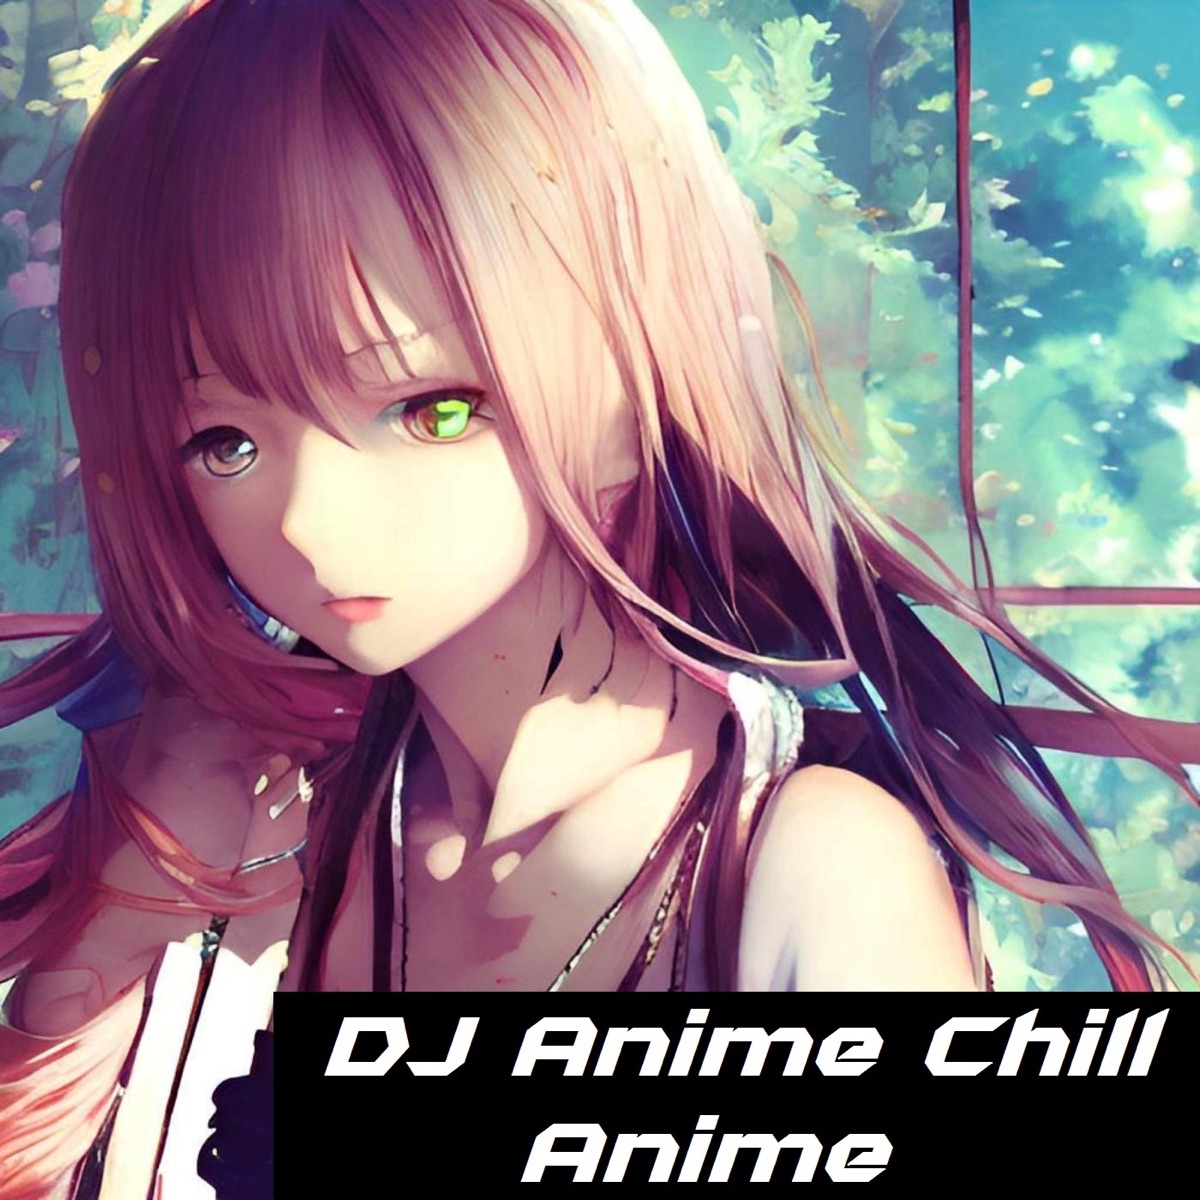 prompthunt: lofi girl with headphones on, anime good vibes, chill, calm